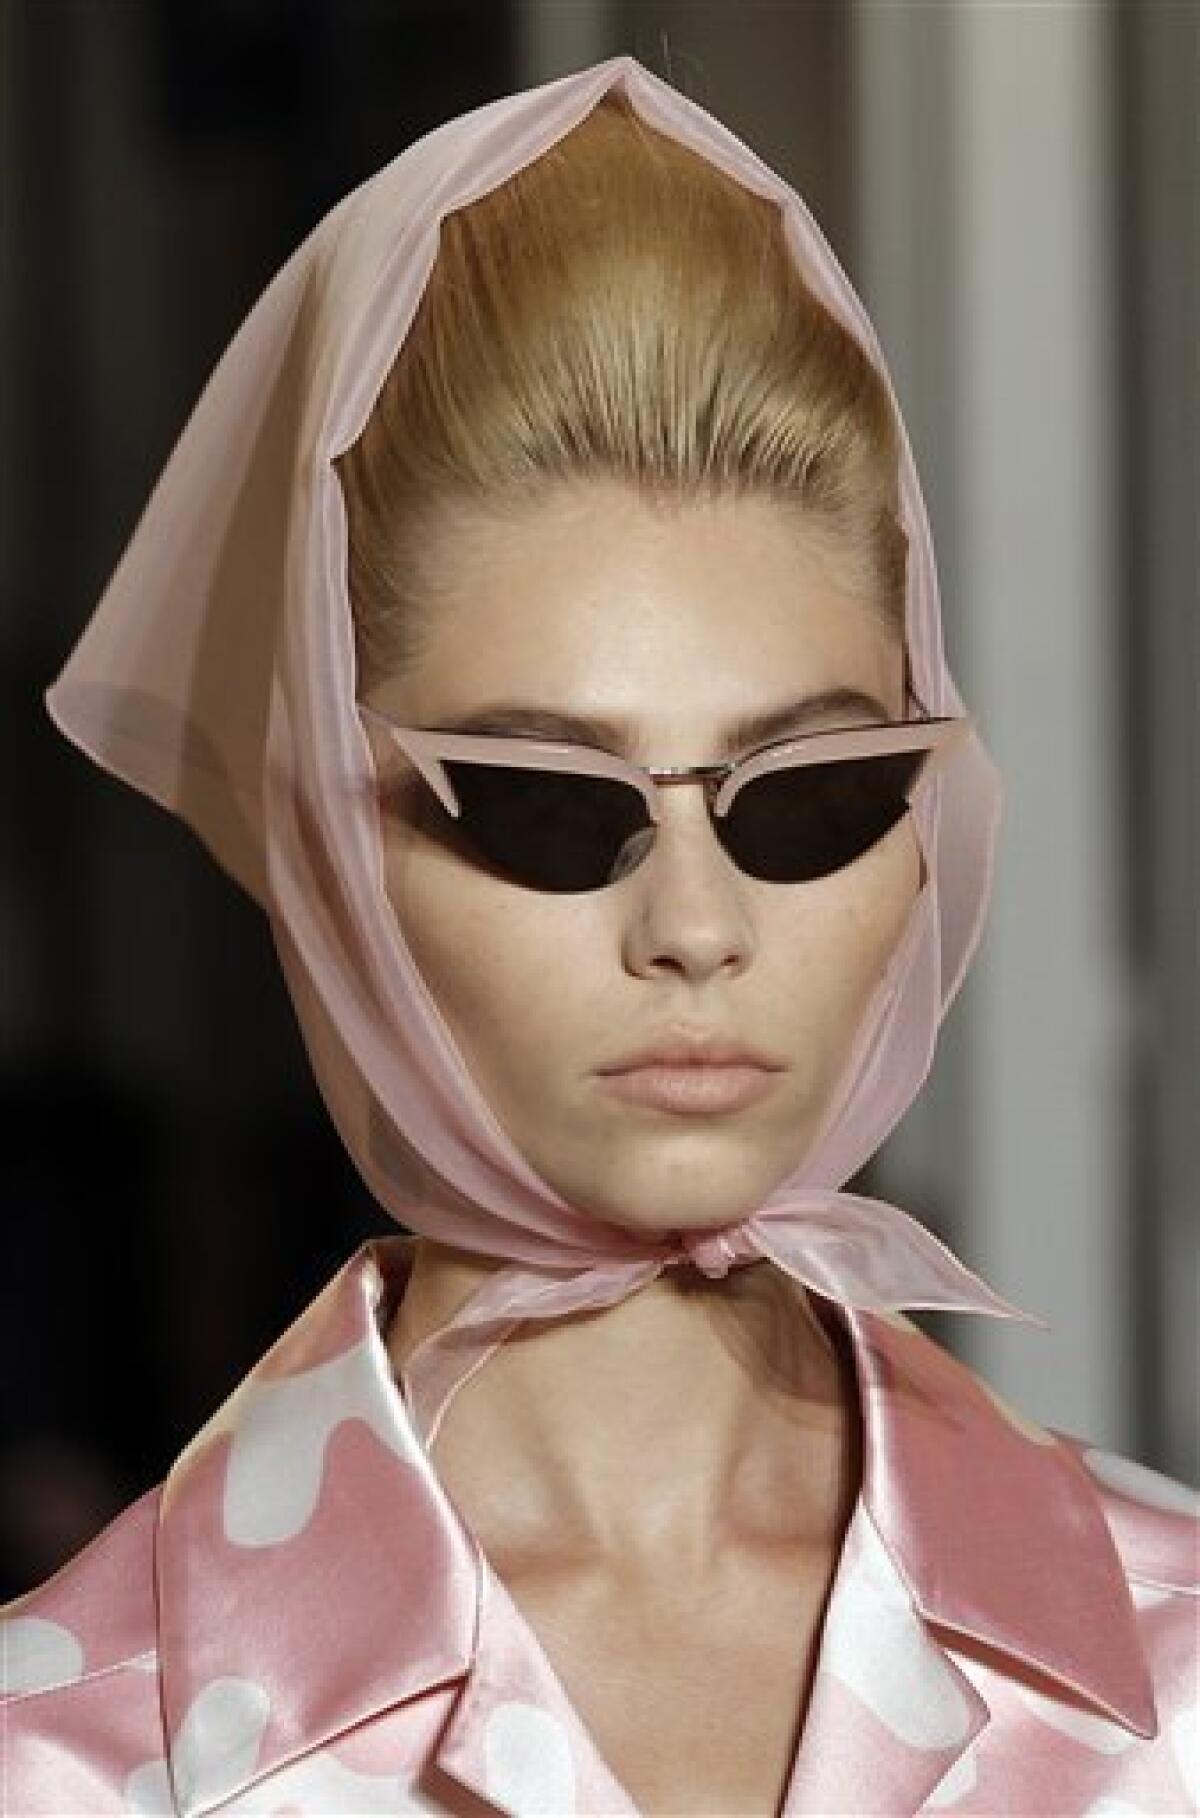 Gaga stylist disappoints at Paris fashion week - The San Diego Union-Tribune